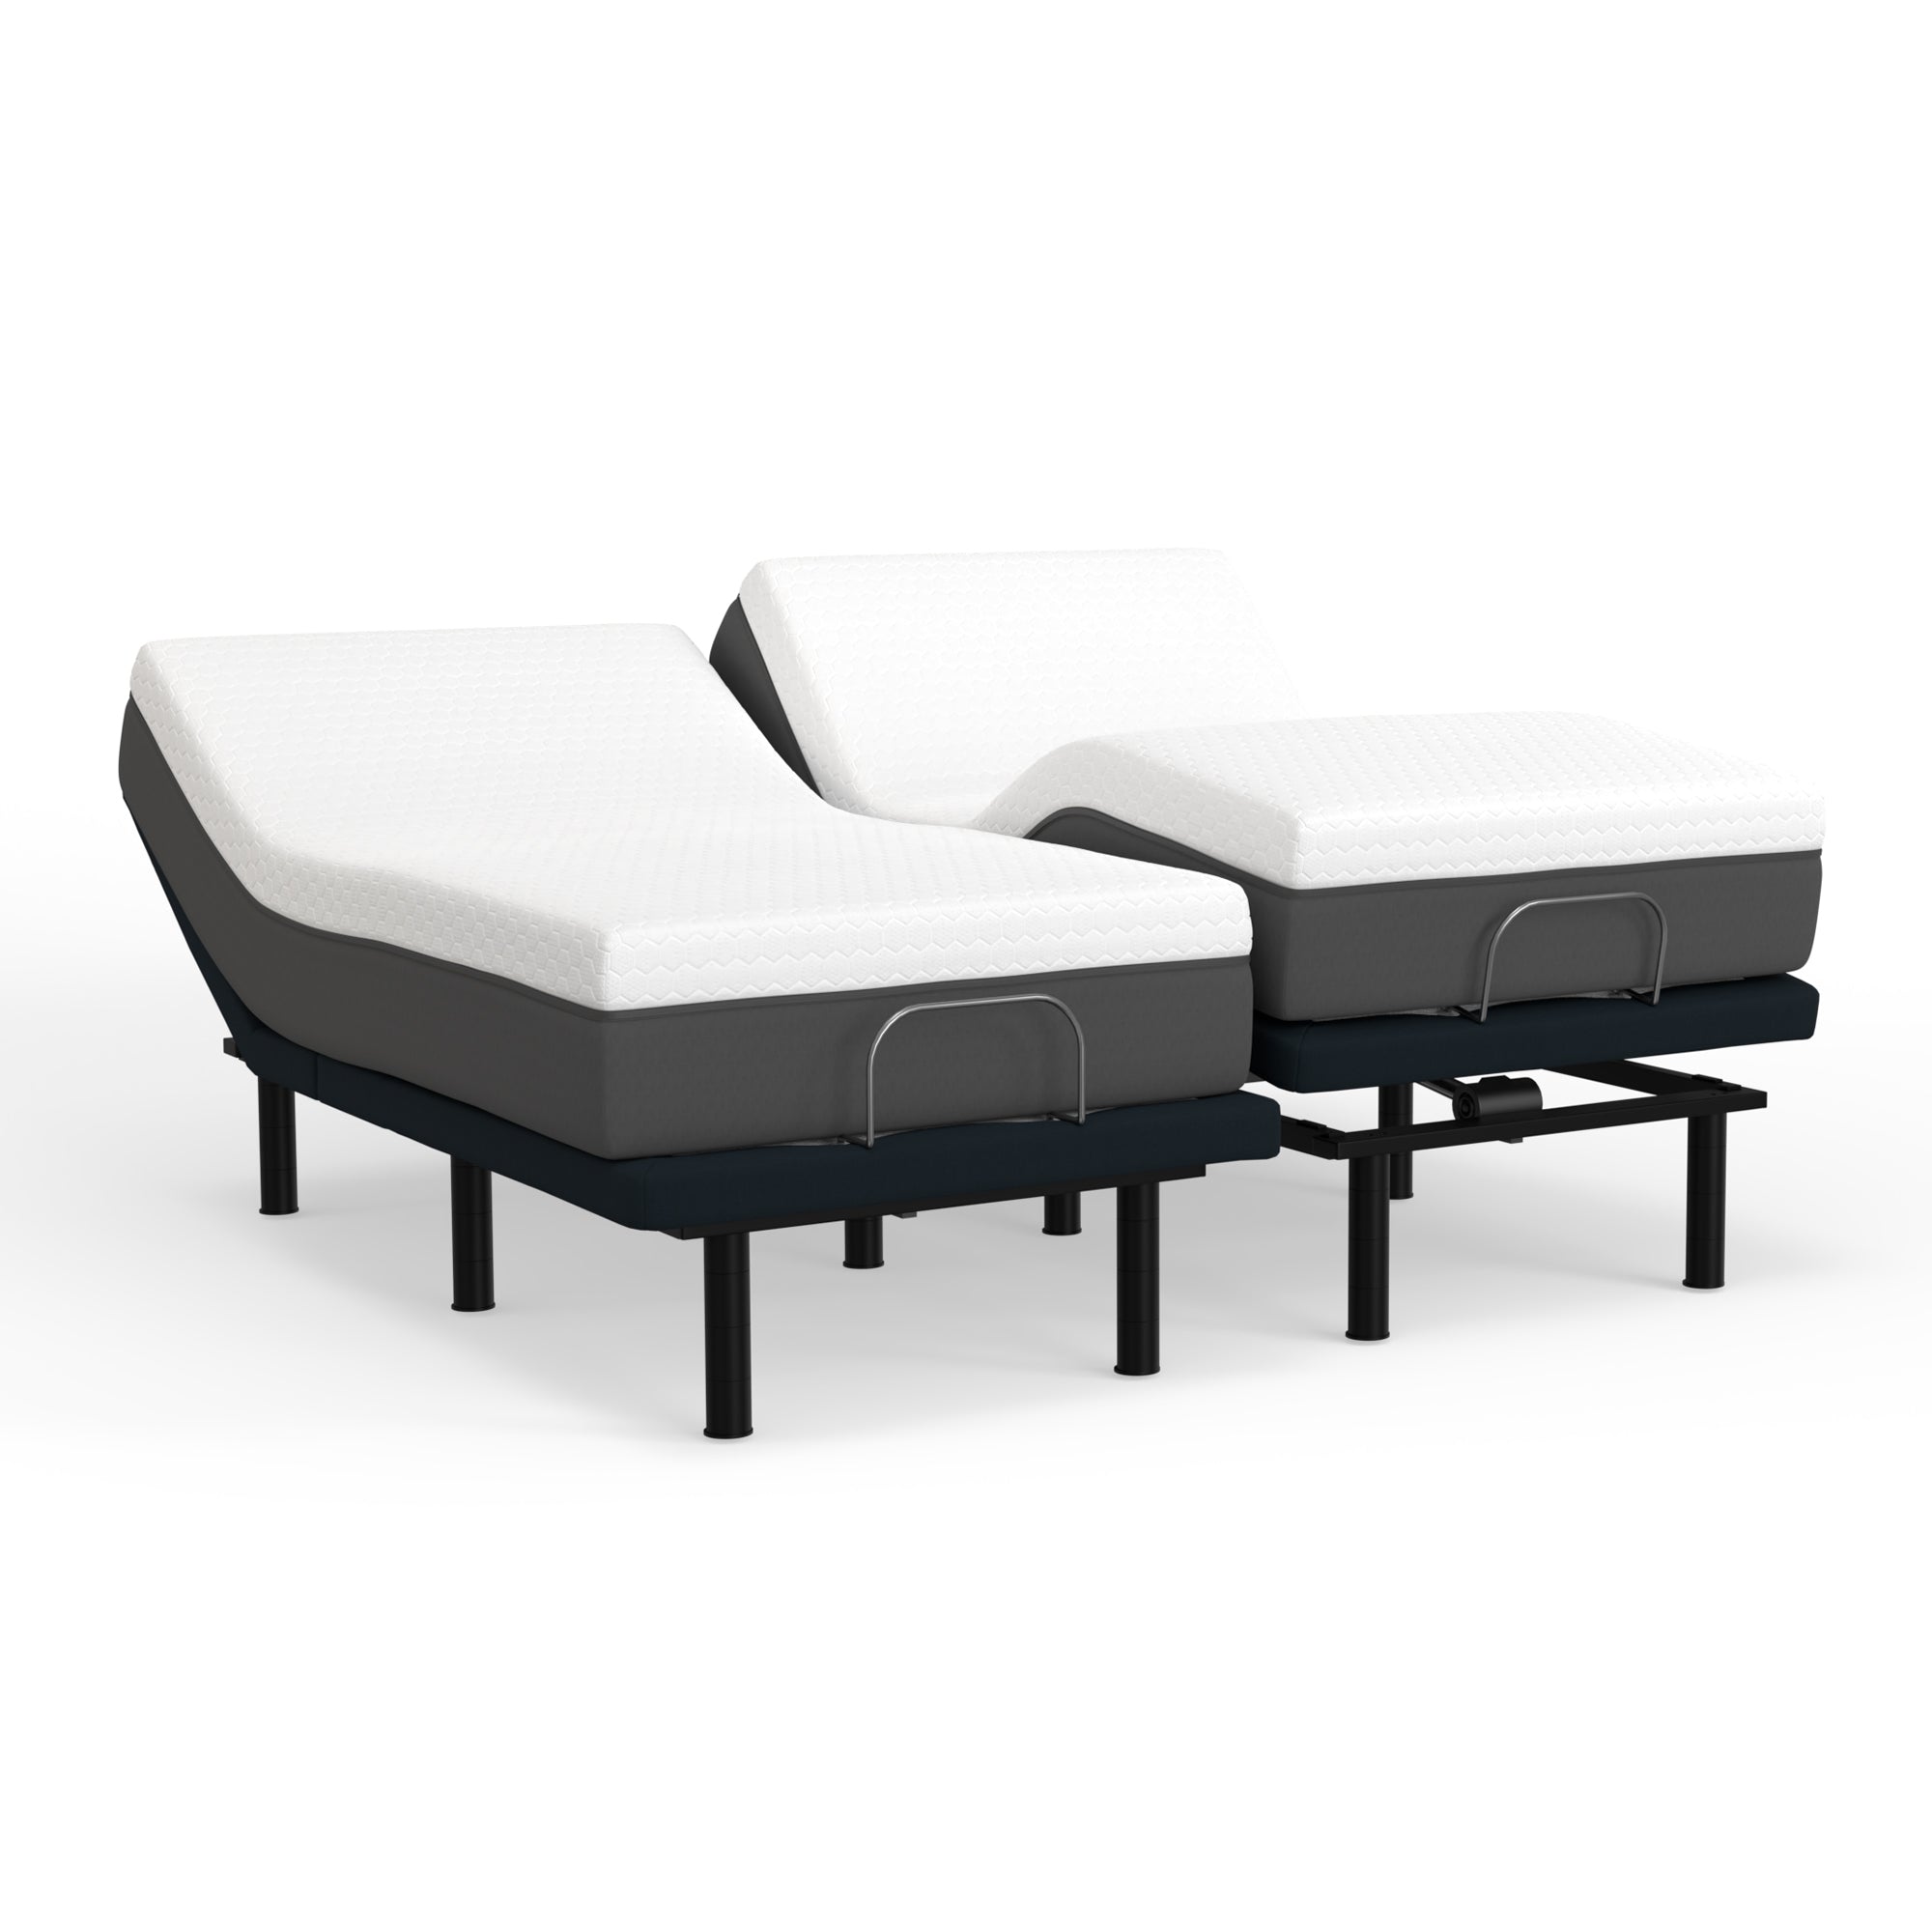 Blissful Nights Sleep System: 12" Zoned Reactive Cooling Memory Foam Mattress, Medium with Luxury Pillow-Tilt Adjustable Base